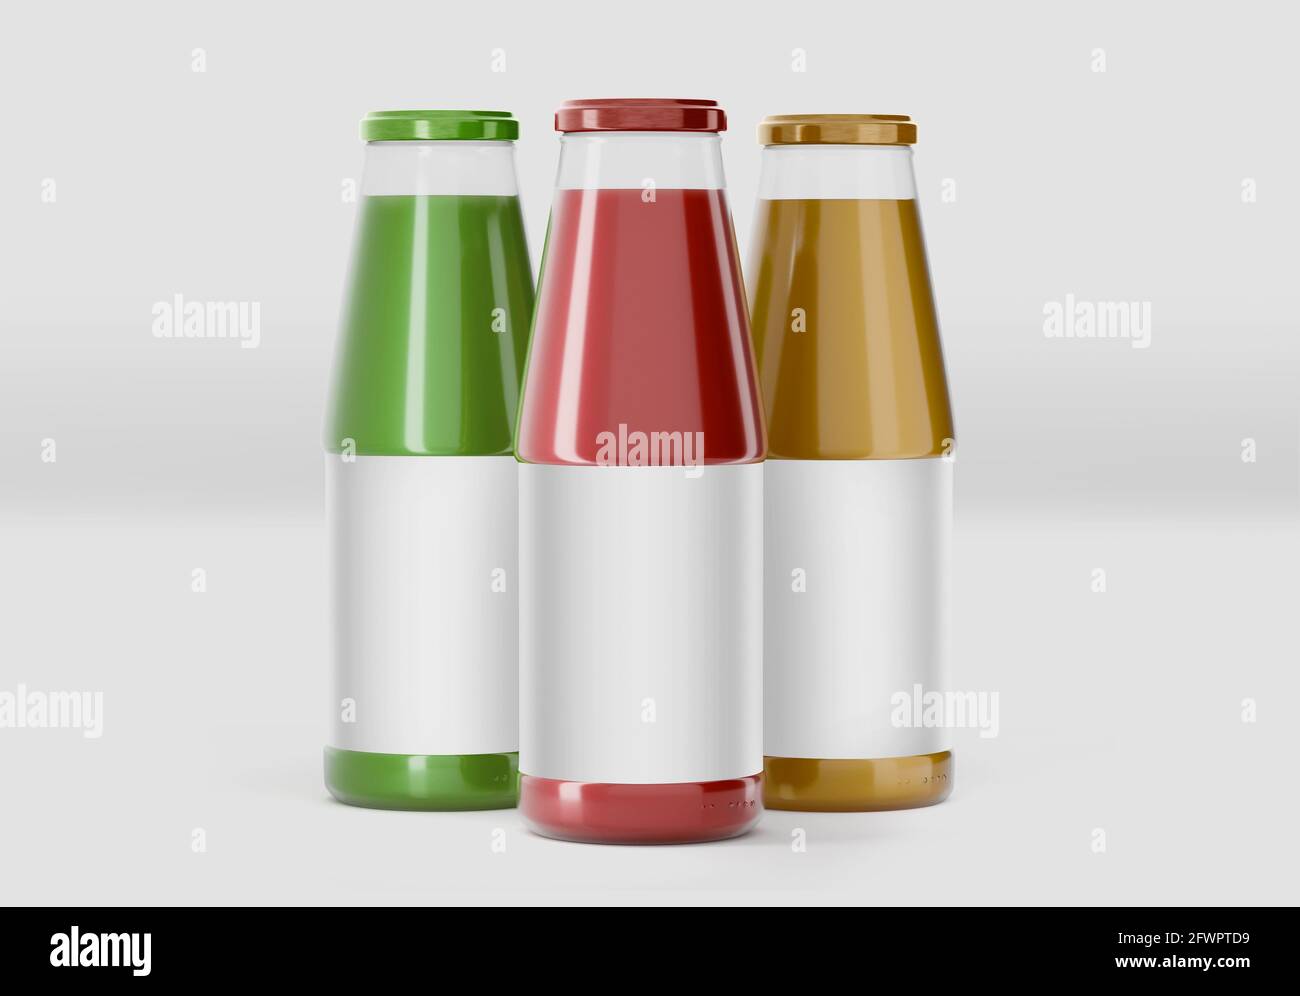 https://c8.alamy.com/comp/2FWPTD9/juice-glass-bottle-mockup-with-white-label-3d-rendering-on-light-background-fresh-juice-package-design-2FWPTD9.jpg